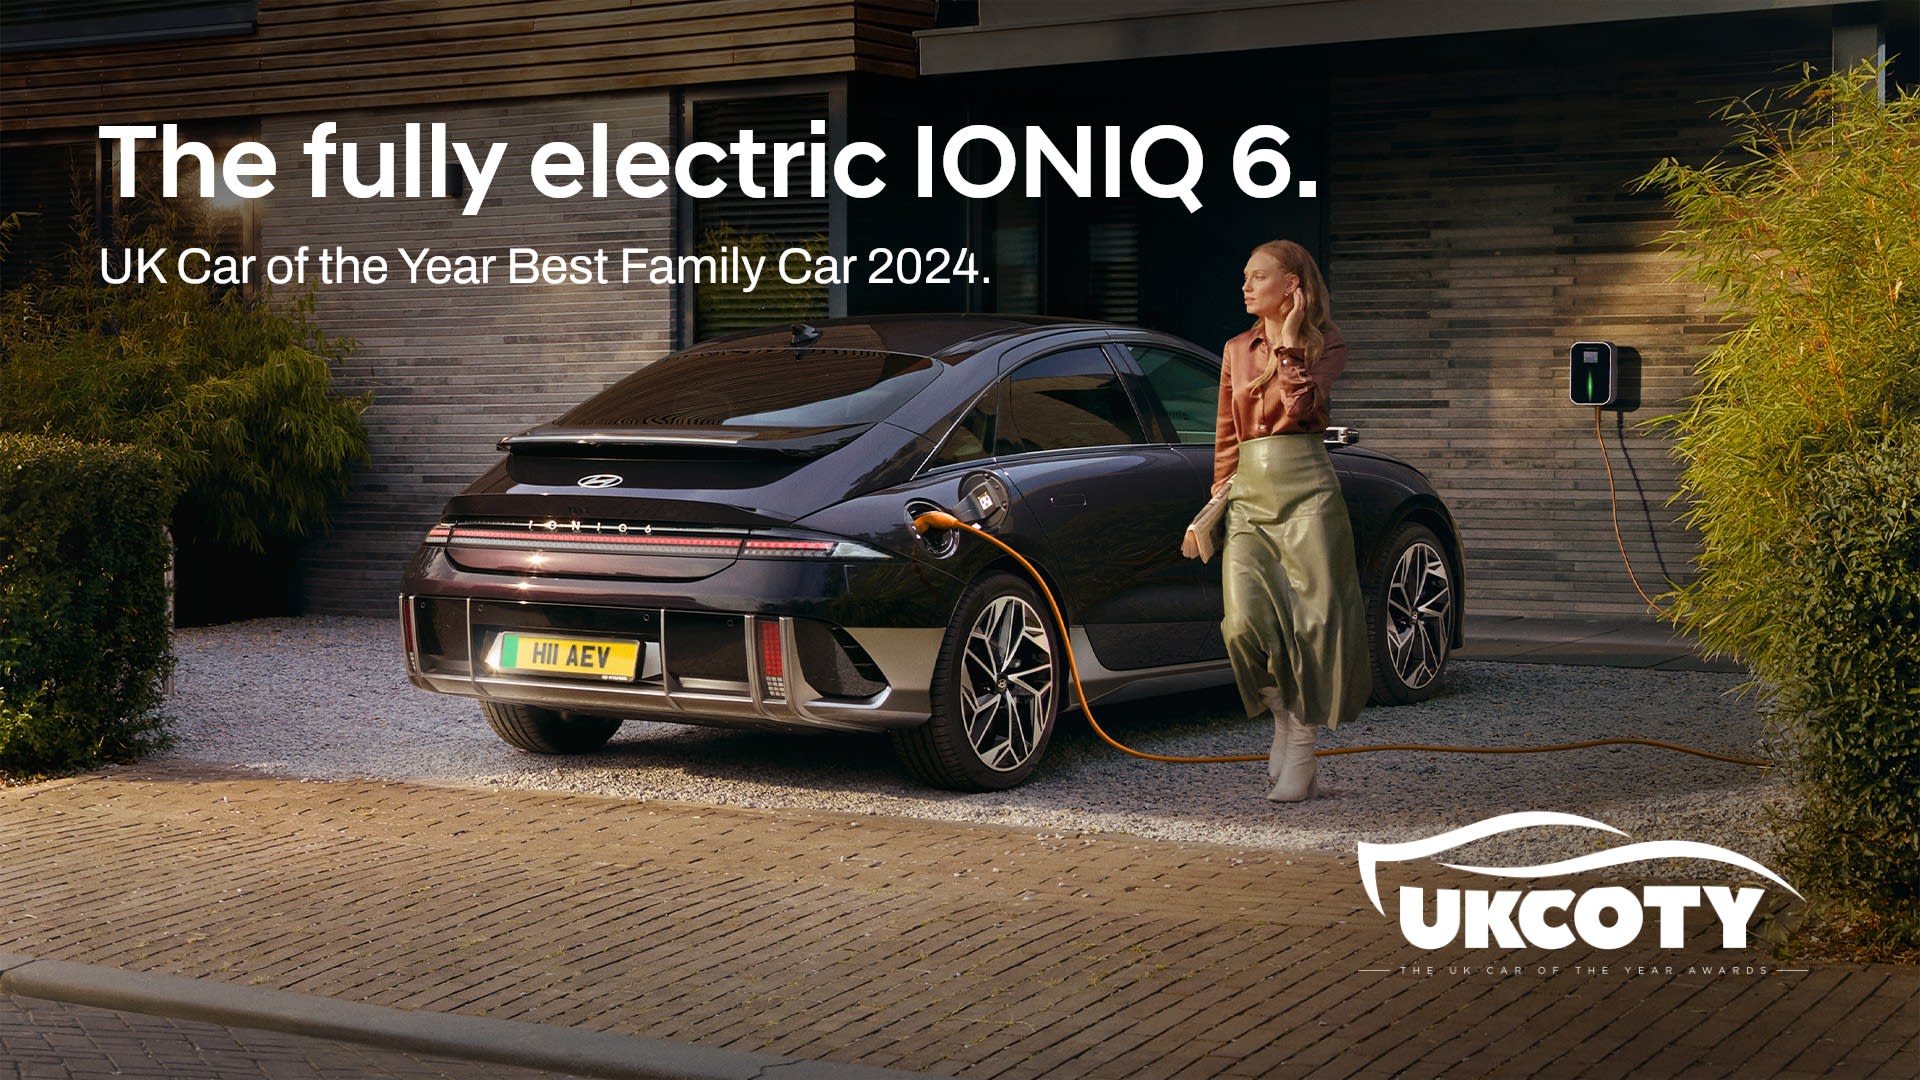 The fully electric IONIQ 6